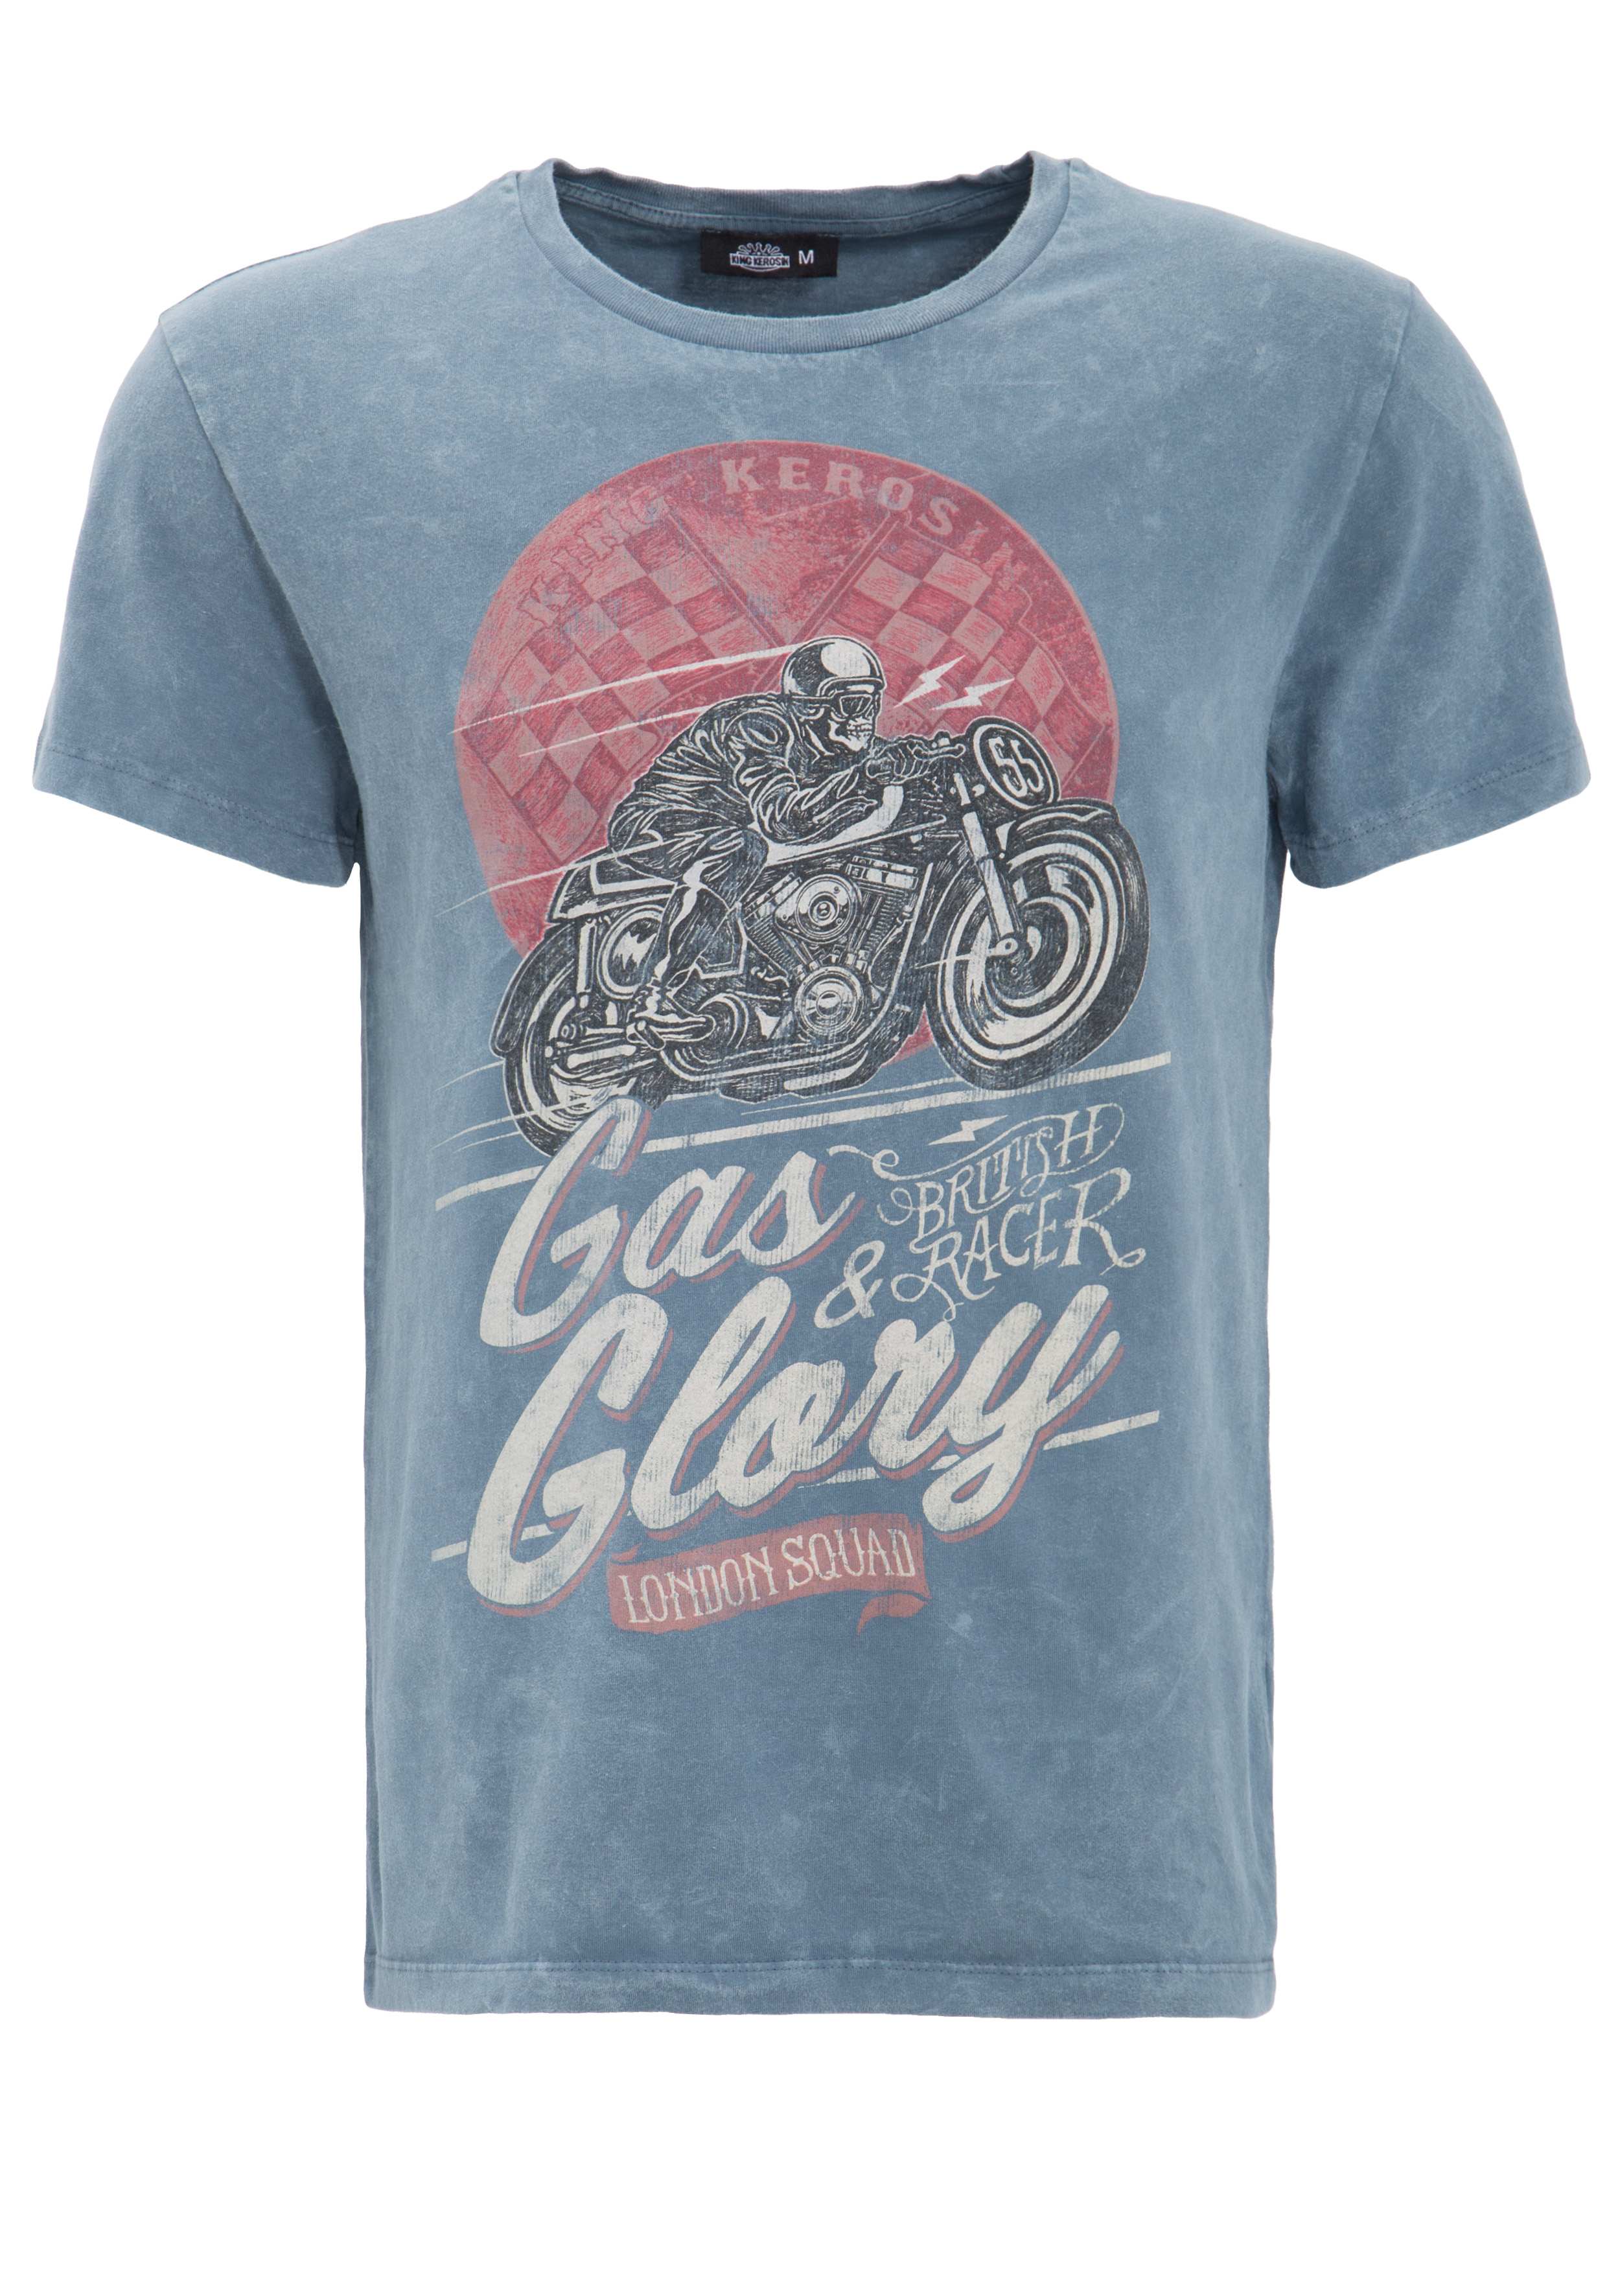 King Kerosin T-Shirt - Gas & Glory S